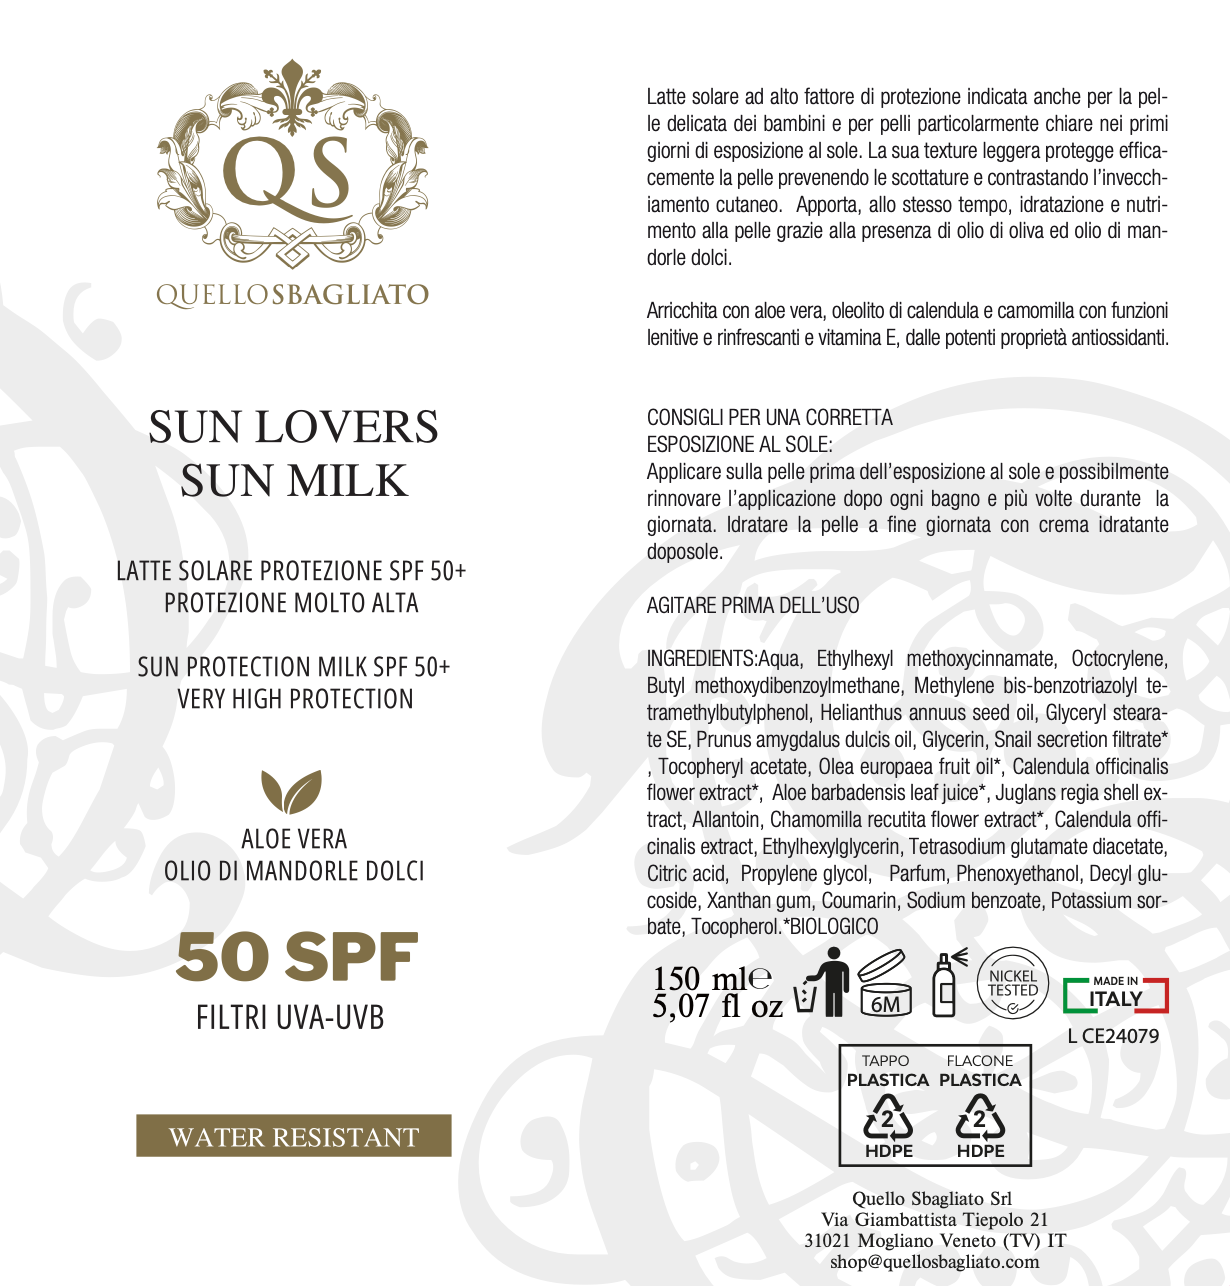 Sun Lovers - Sun Milk SPF 50+